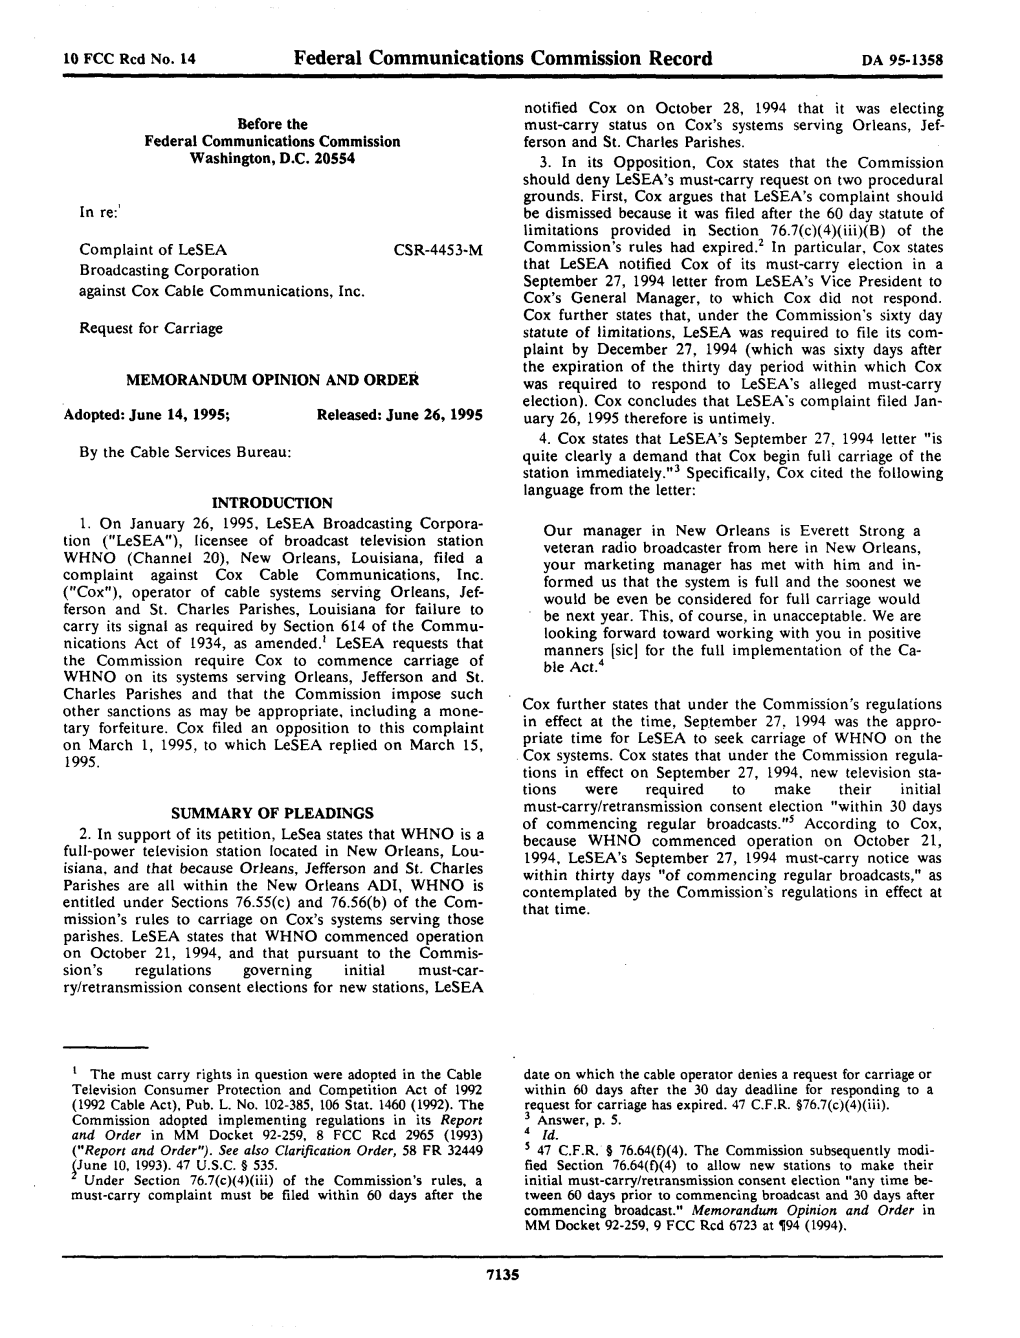 Federal Communications Commission Record DA 95-1358